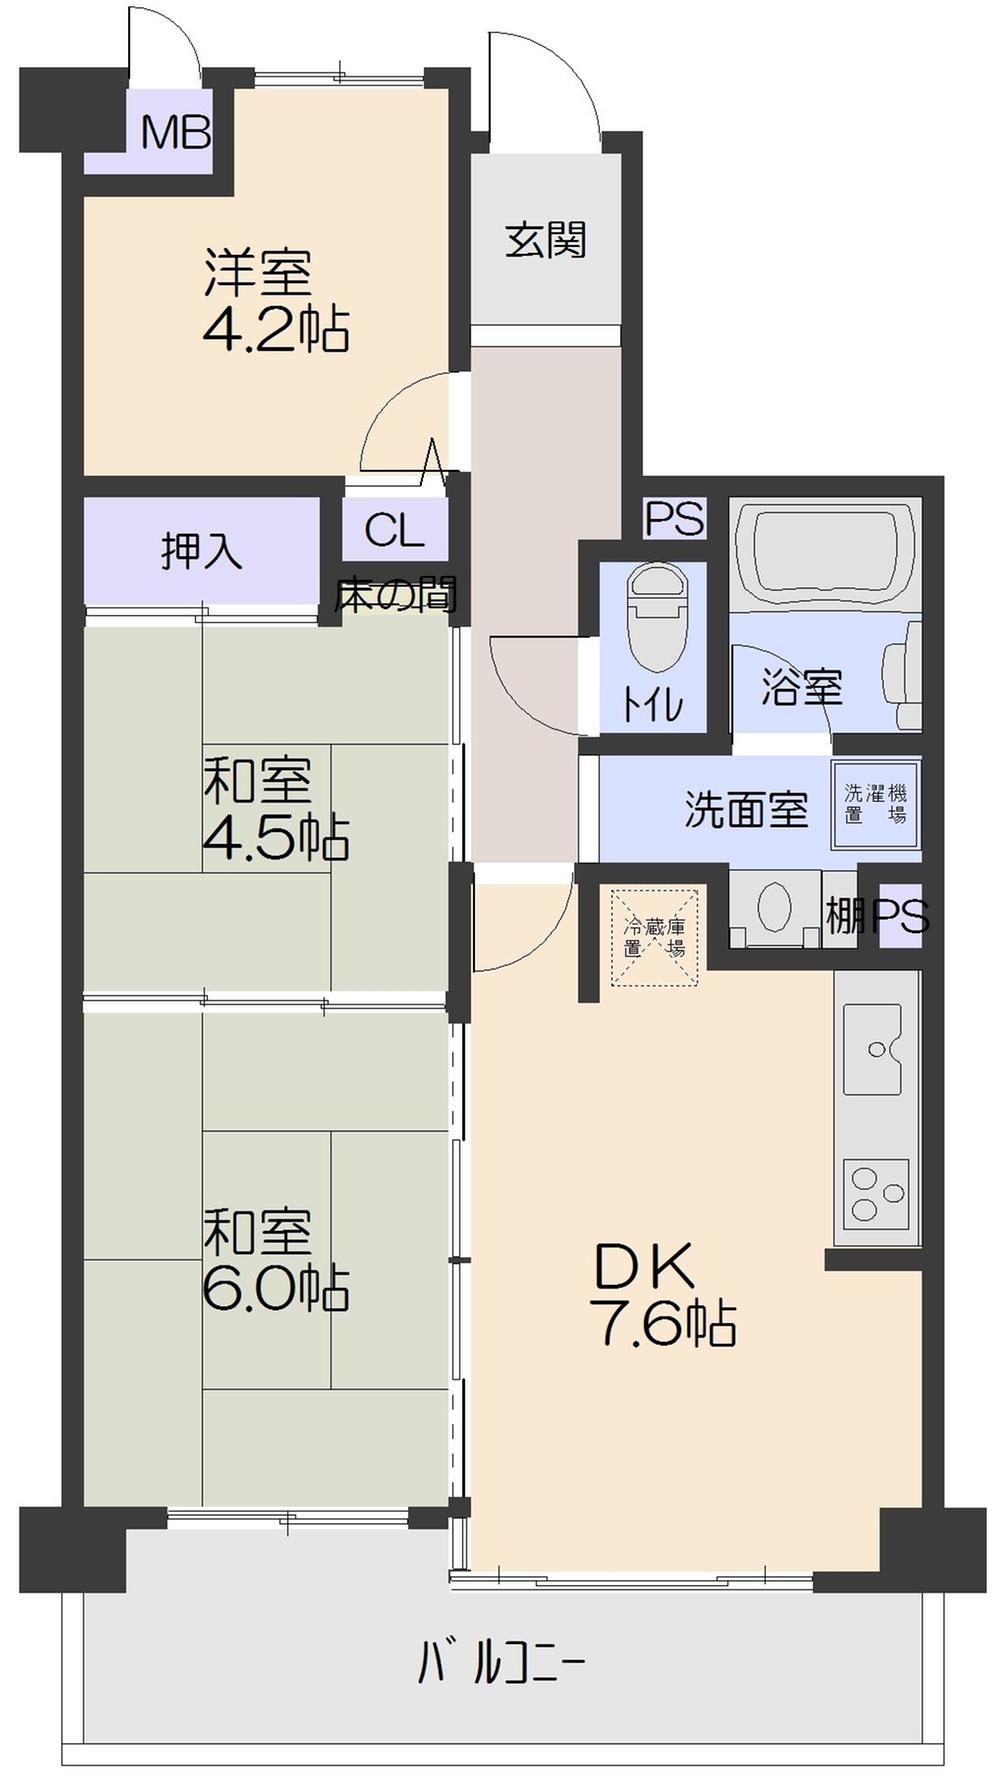 Floor plan. 3LDK, Price 12.8 million yen, Occupied area 57.84 sq m , Balcony area 9.06 sq m